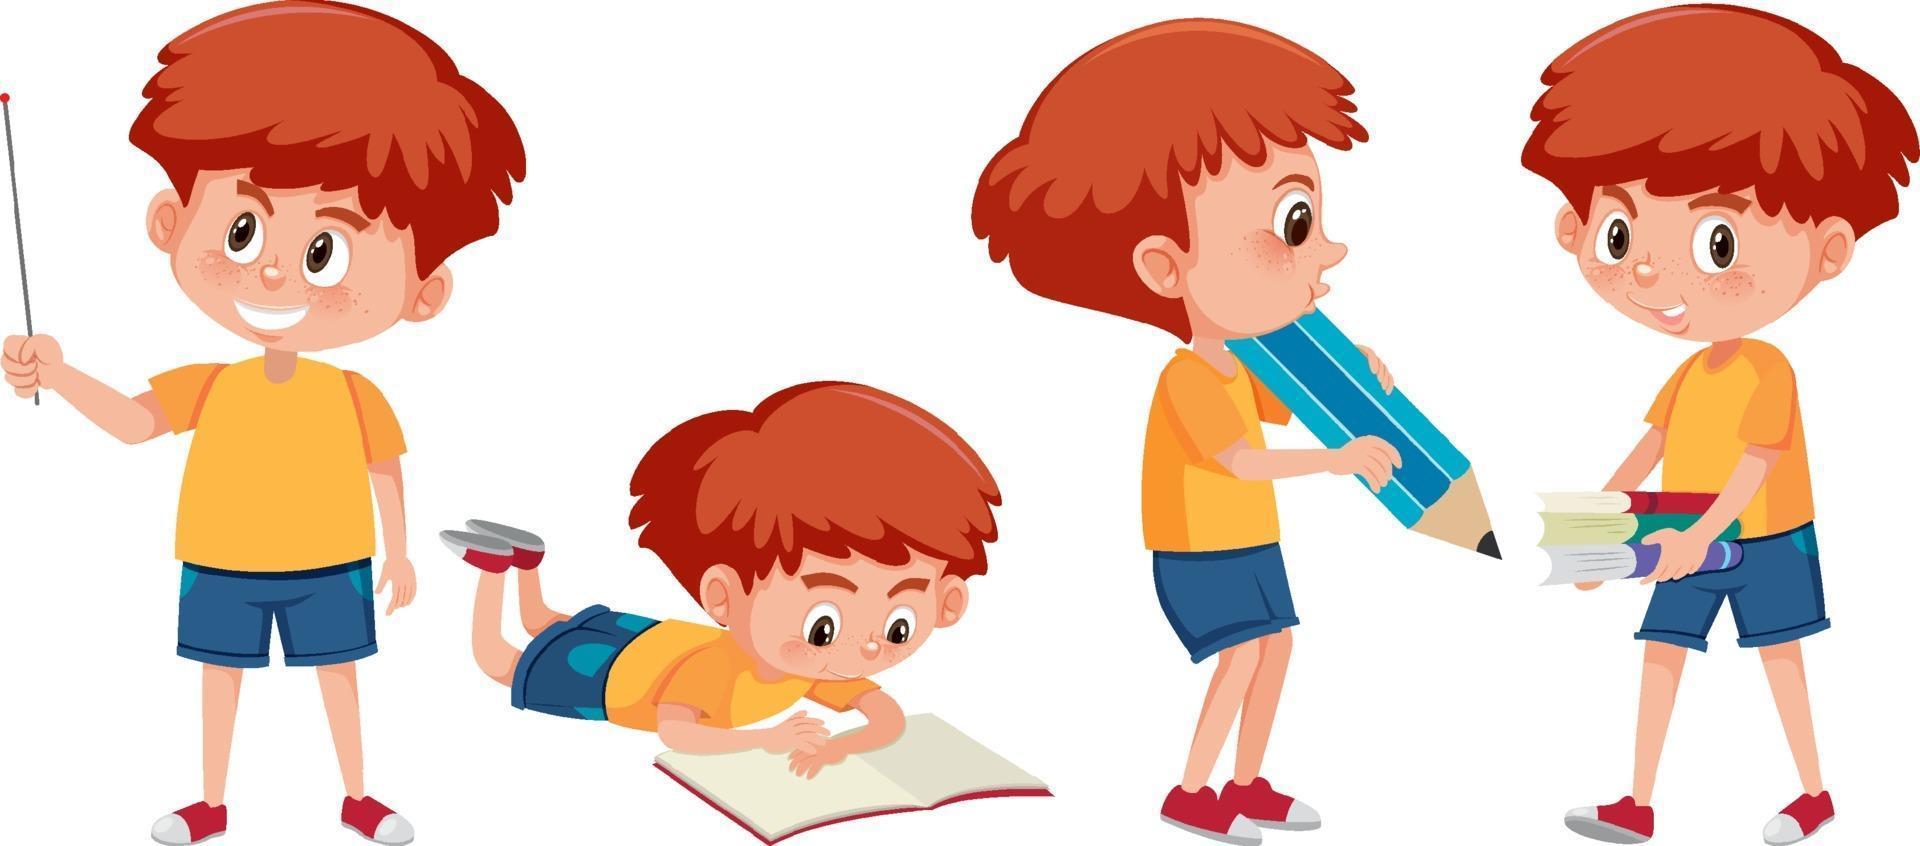 Set of a boy cartoon character doing different activities vector